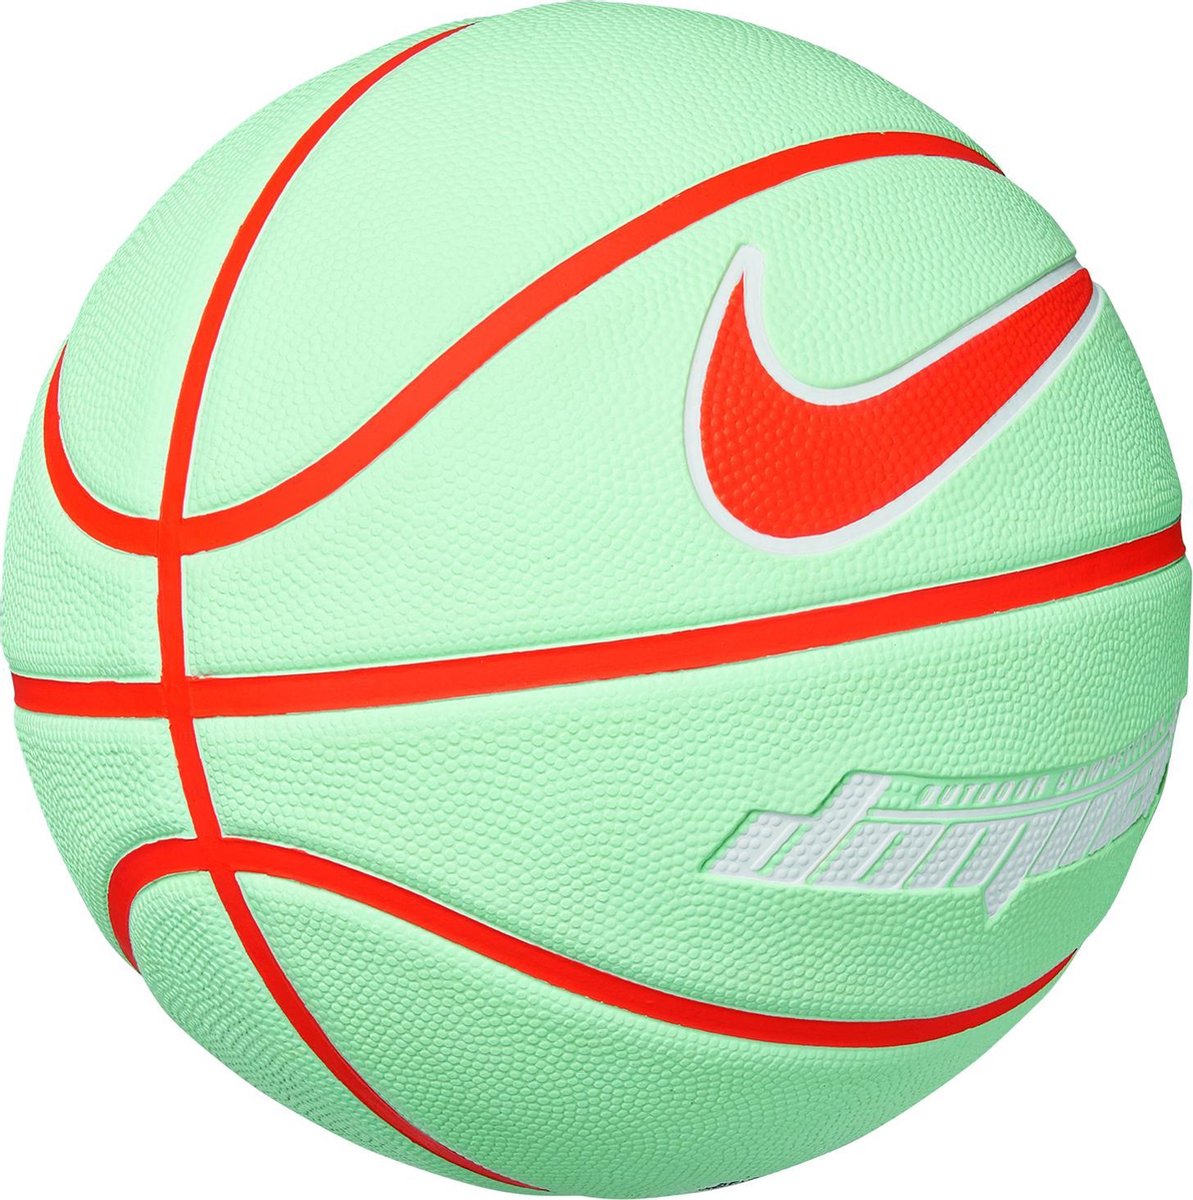 Nike Dominate Basketbal - Mint Groen/Oranje - maat 7 | bol